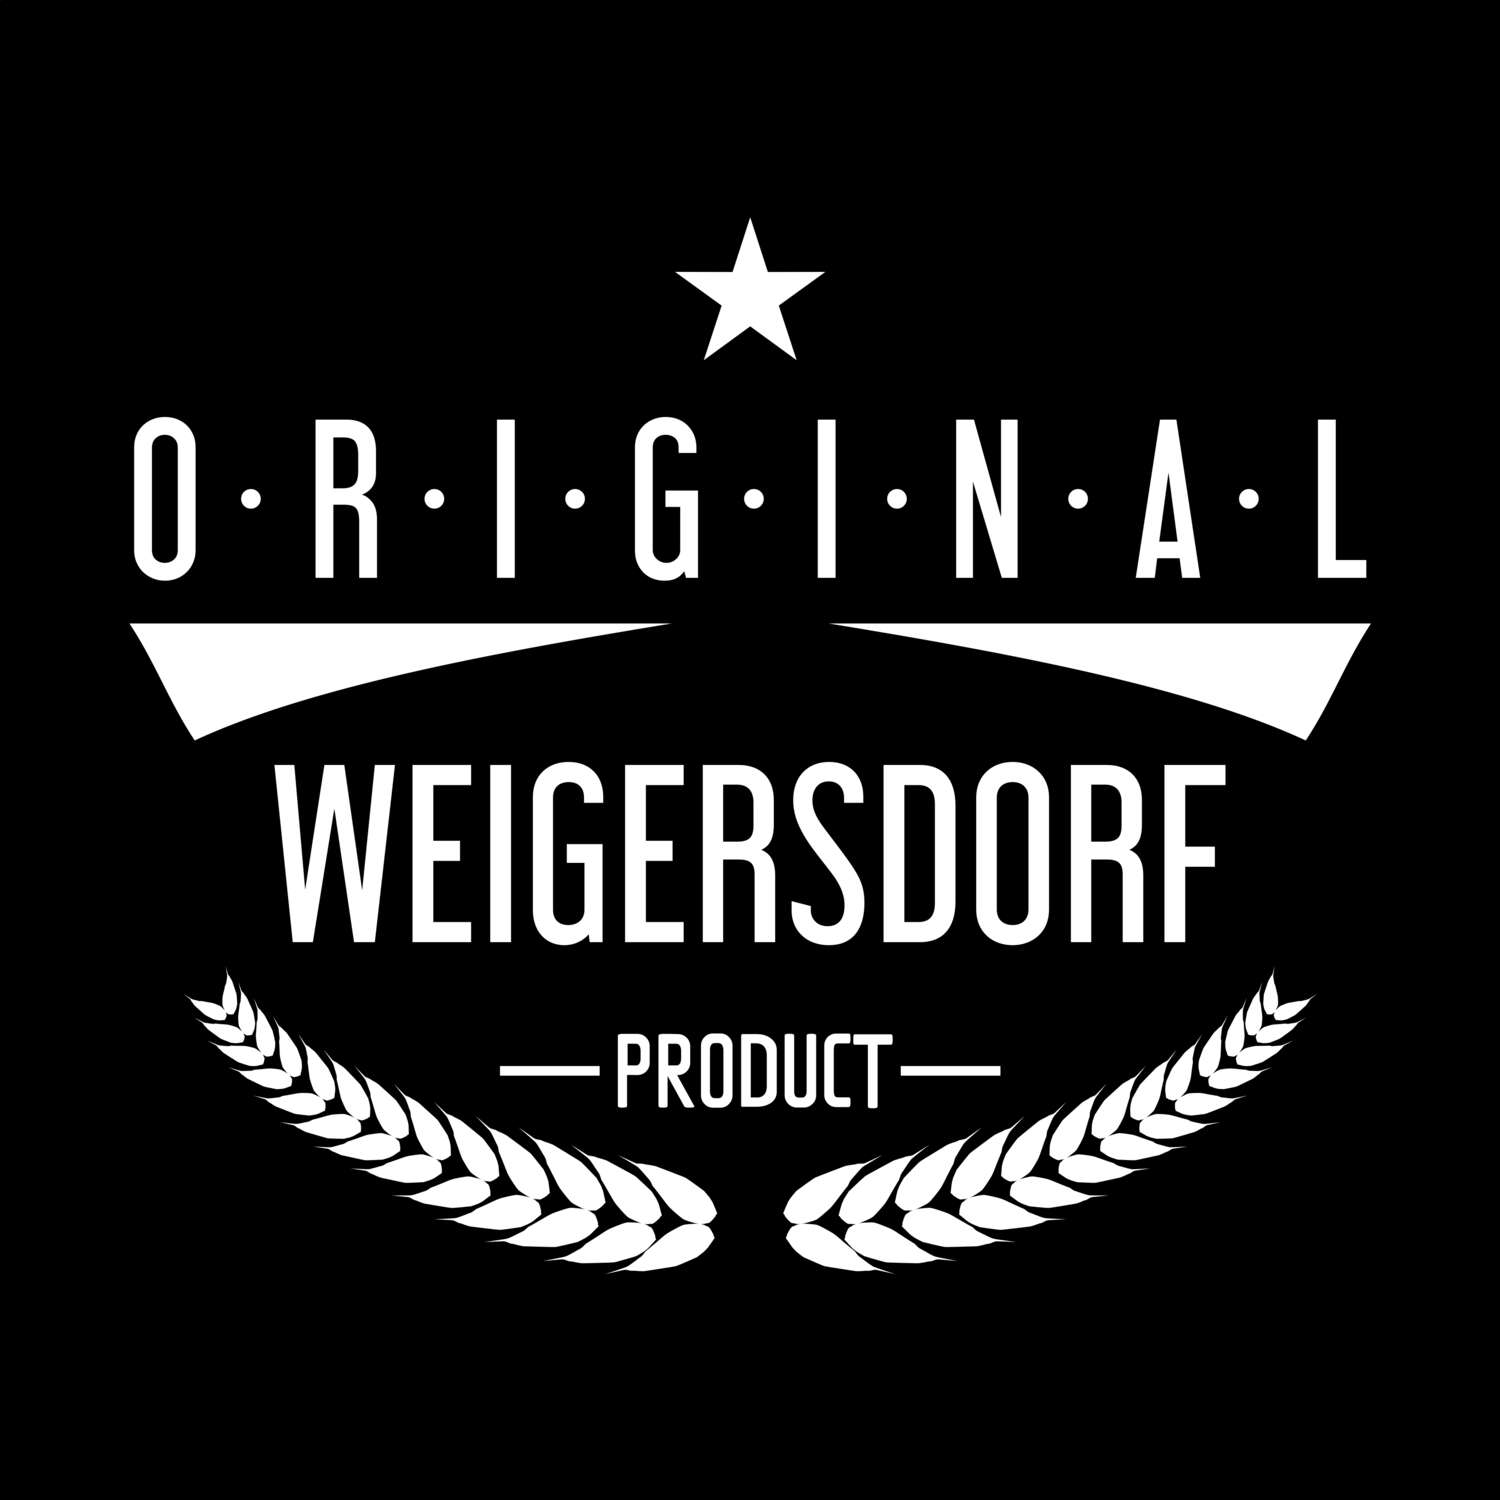 Weigersdorf T-Shirt »Original Product«